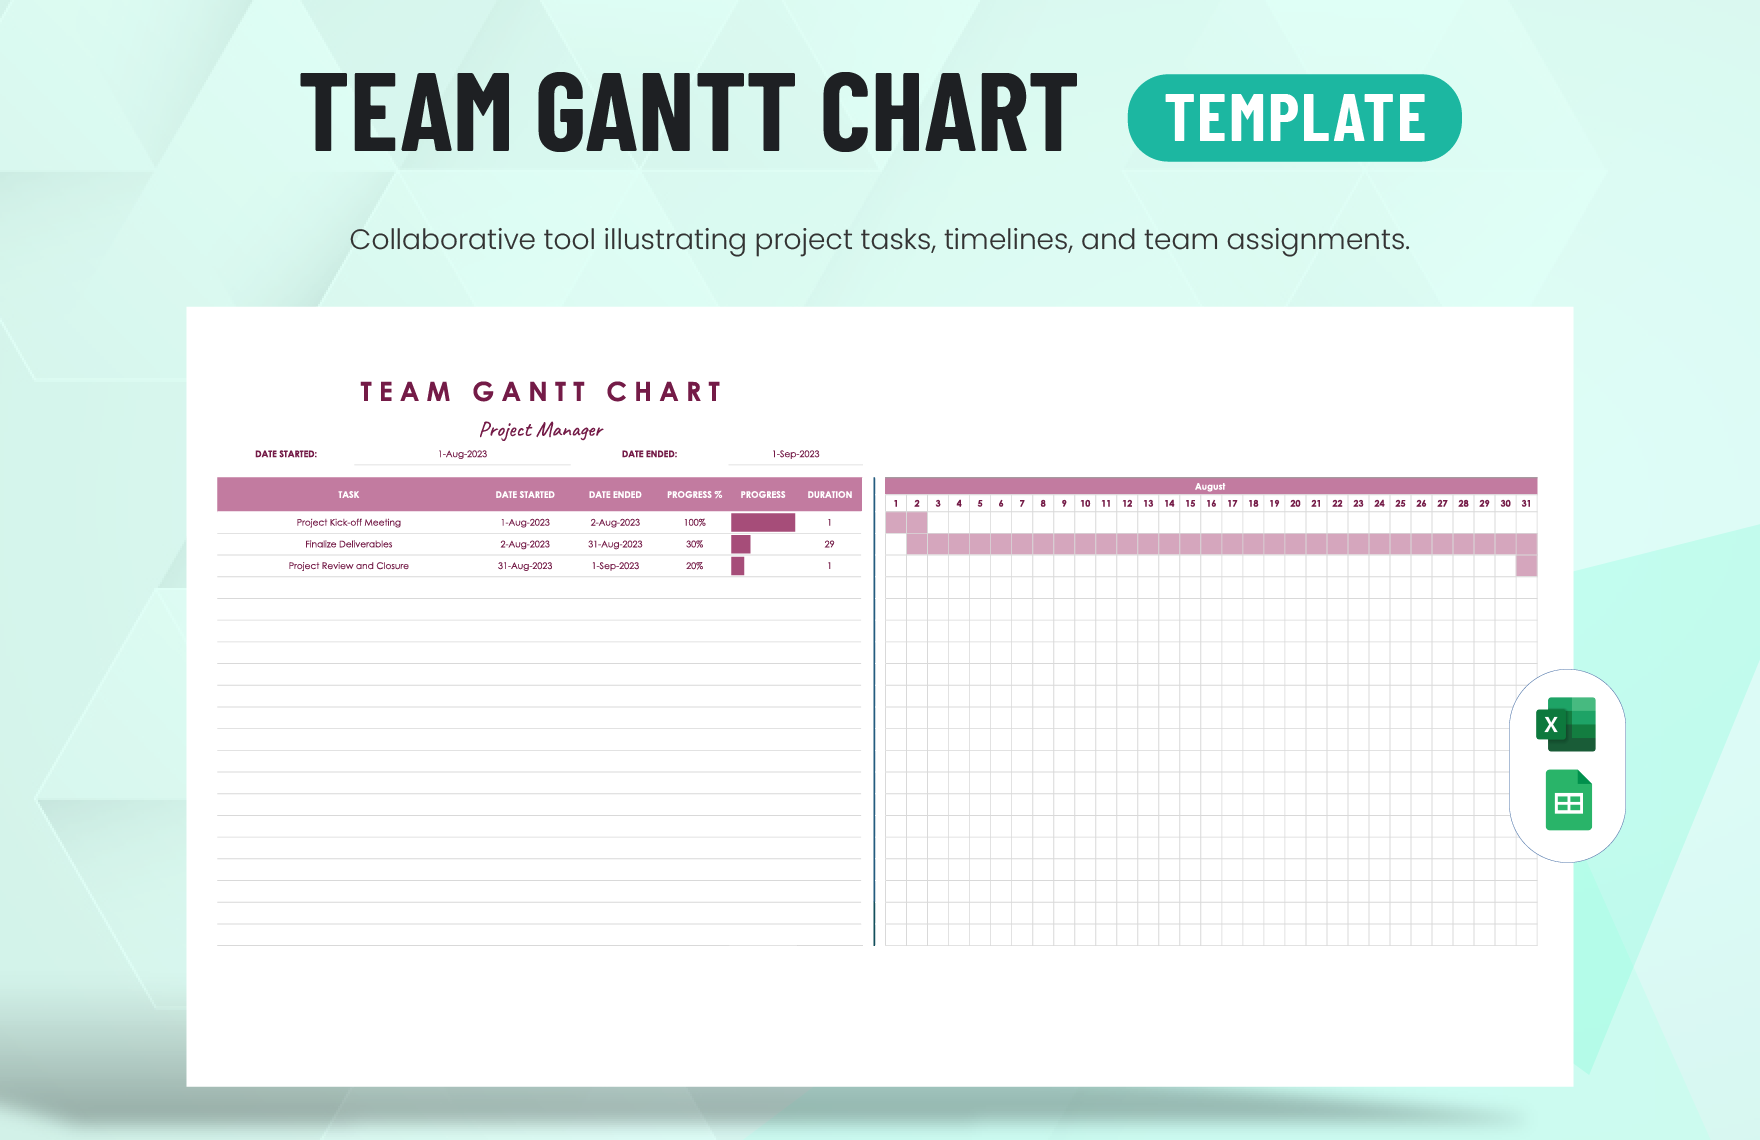 Team Gantt Chart Template in Excel, Google Sheets